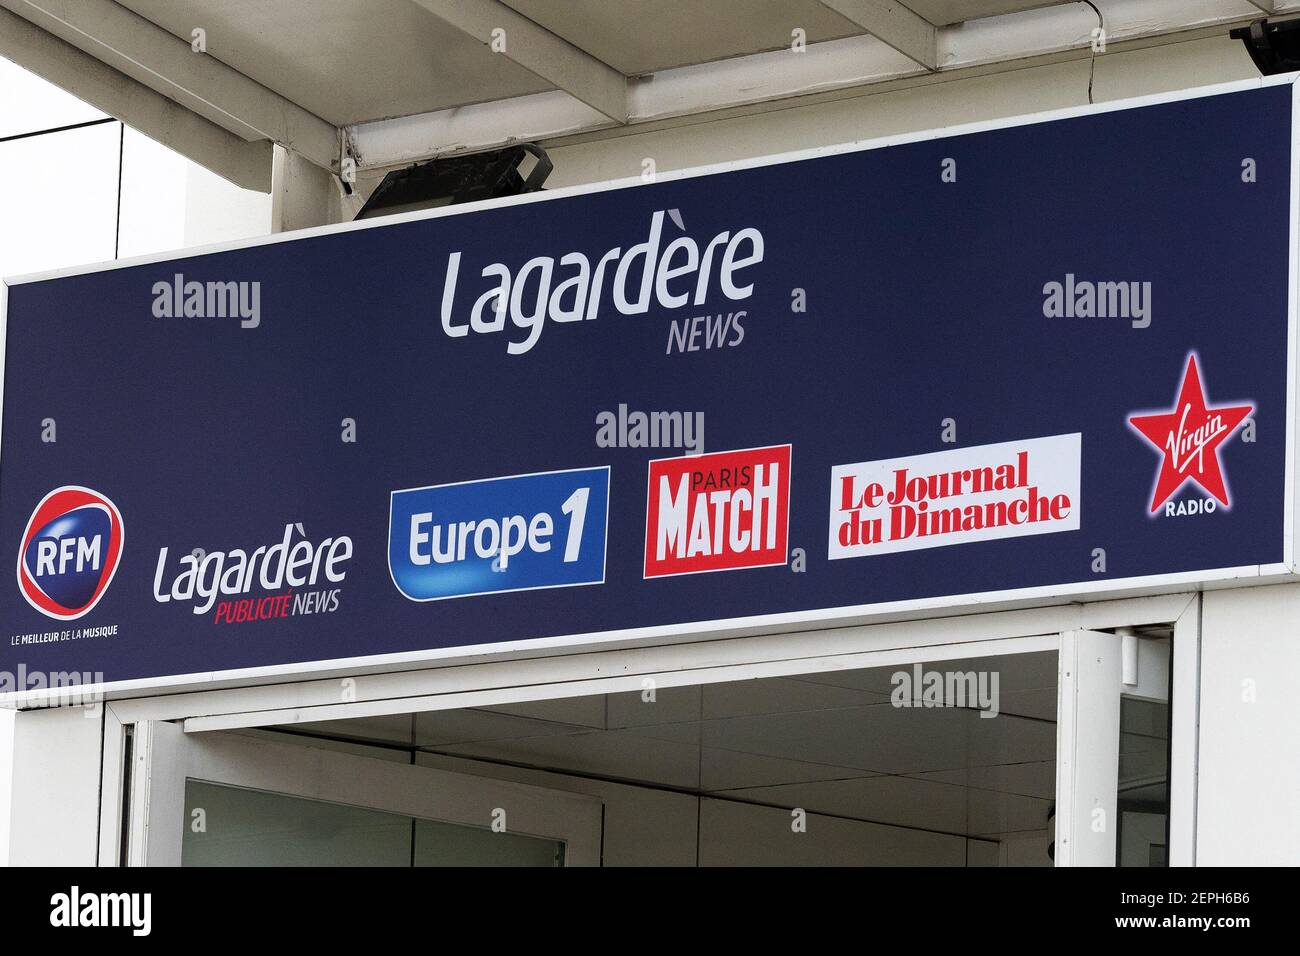 A general view of signs Lagardere News ( RFM, Lagardere publicite news,  EUROPE 1, Paris Match, Le